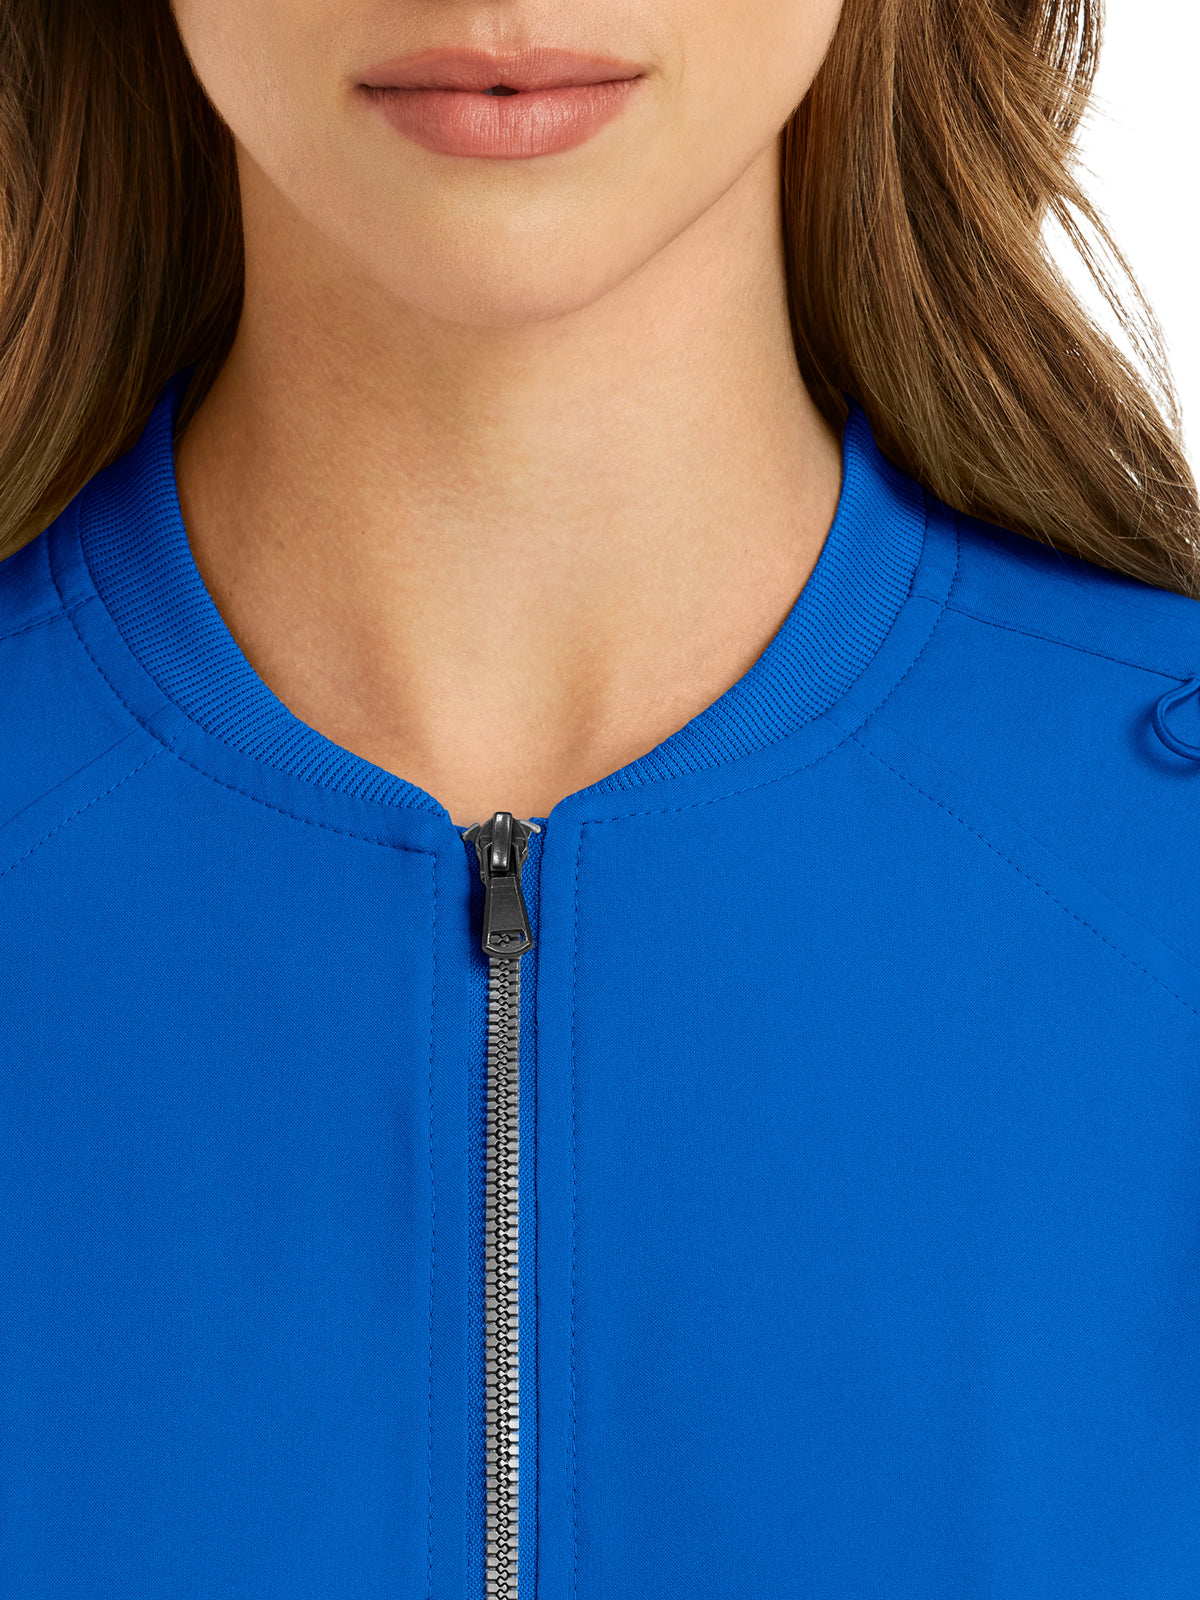 Women's Front Zip Jacket - 5061 - Royal Blue